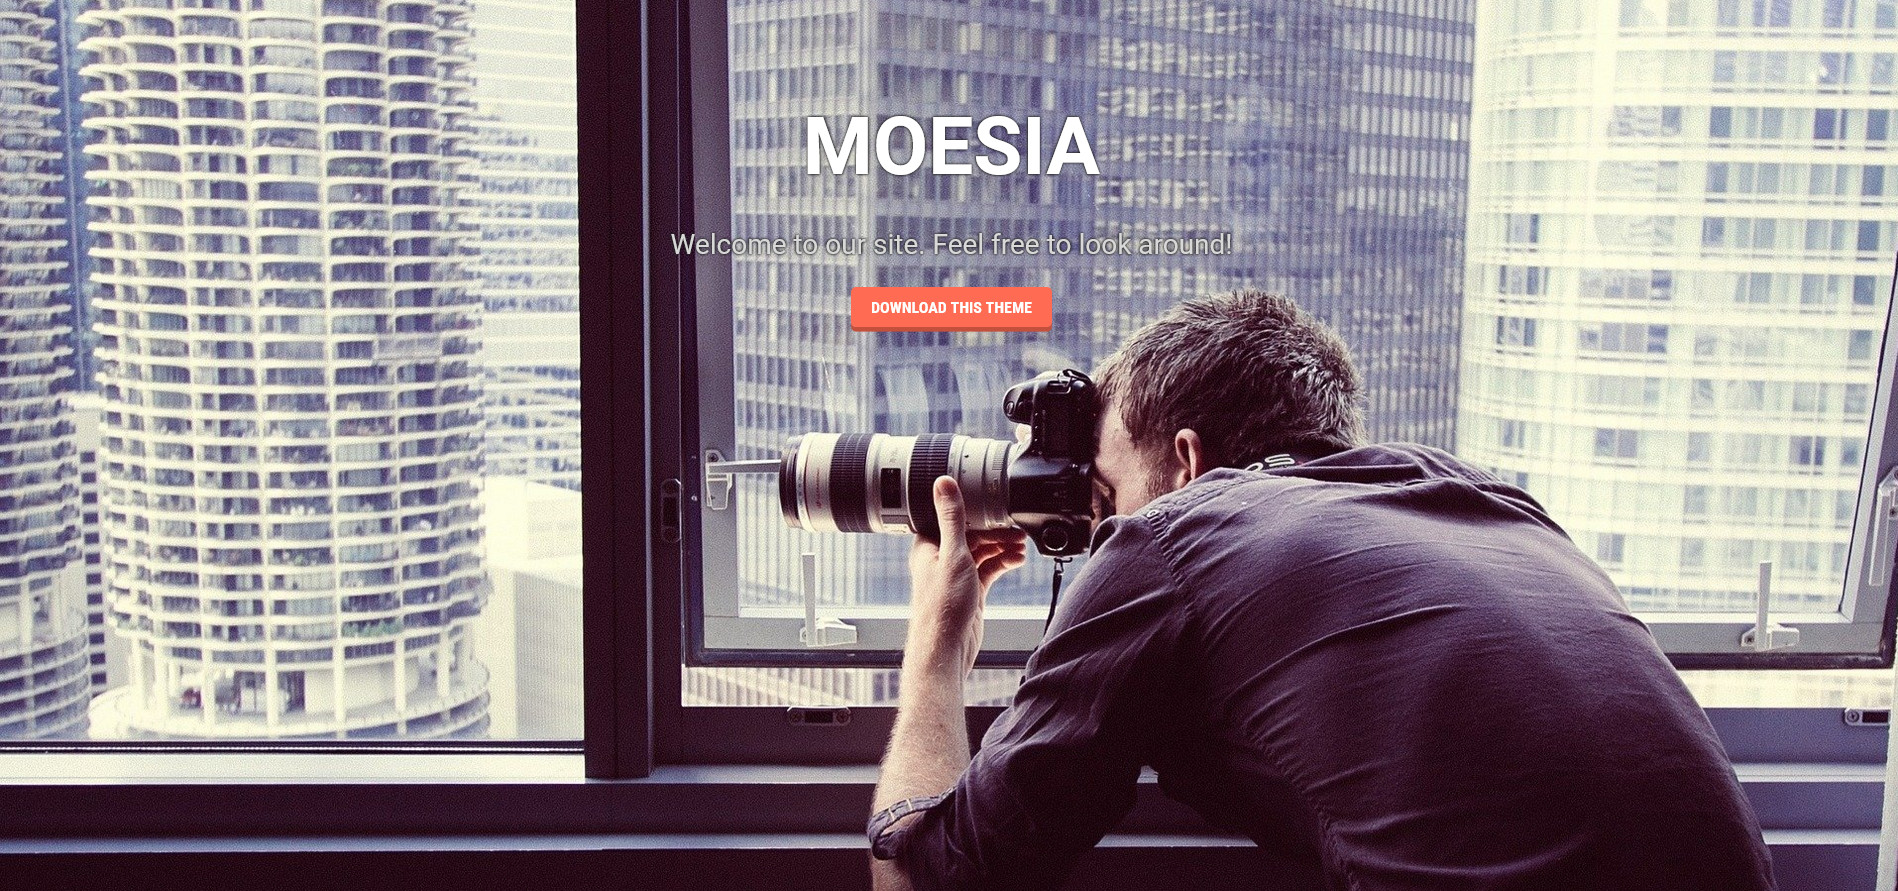 WordPress Theme Moesia